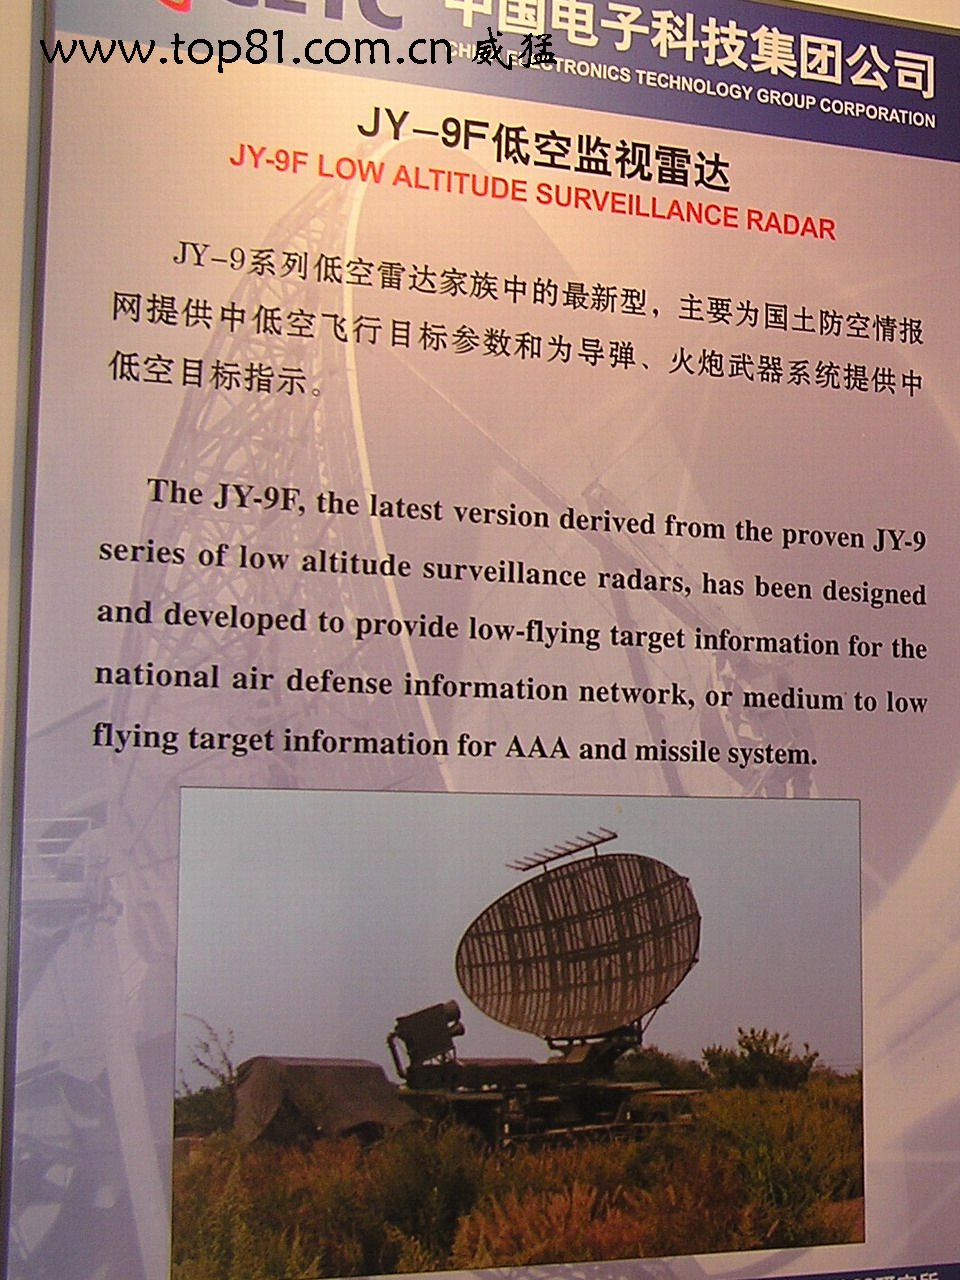 JY-9F low altitude surveillance radar